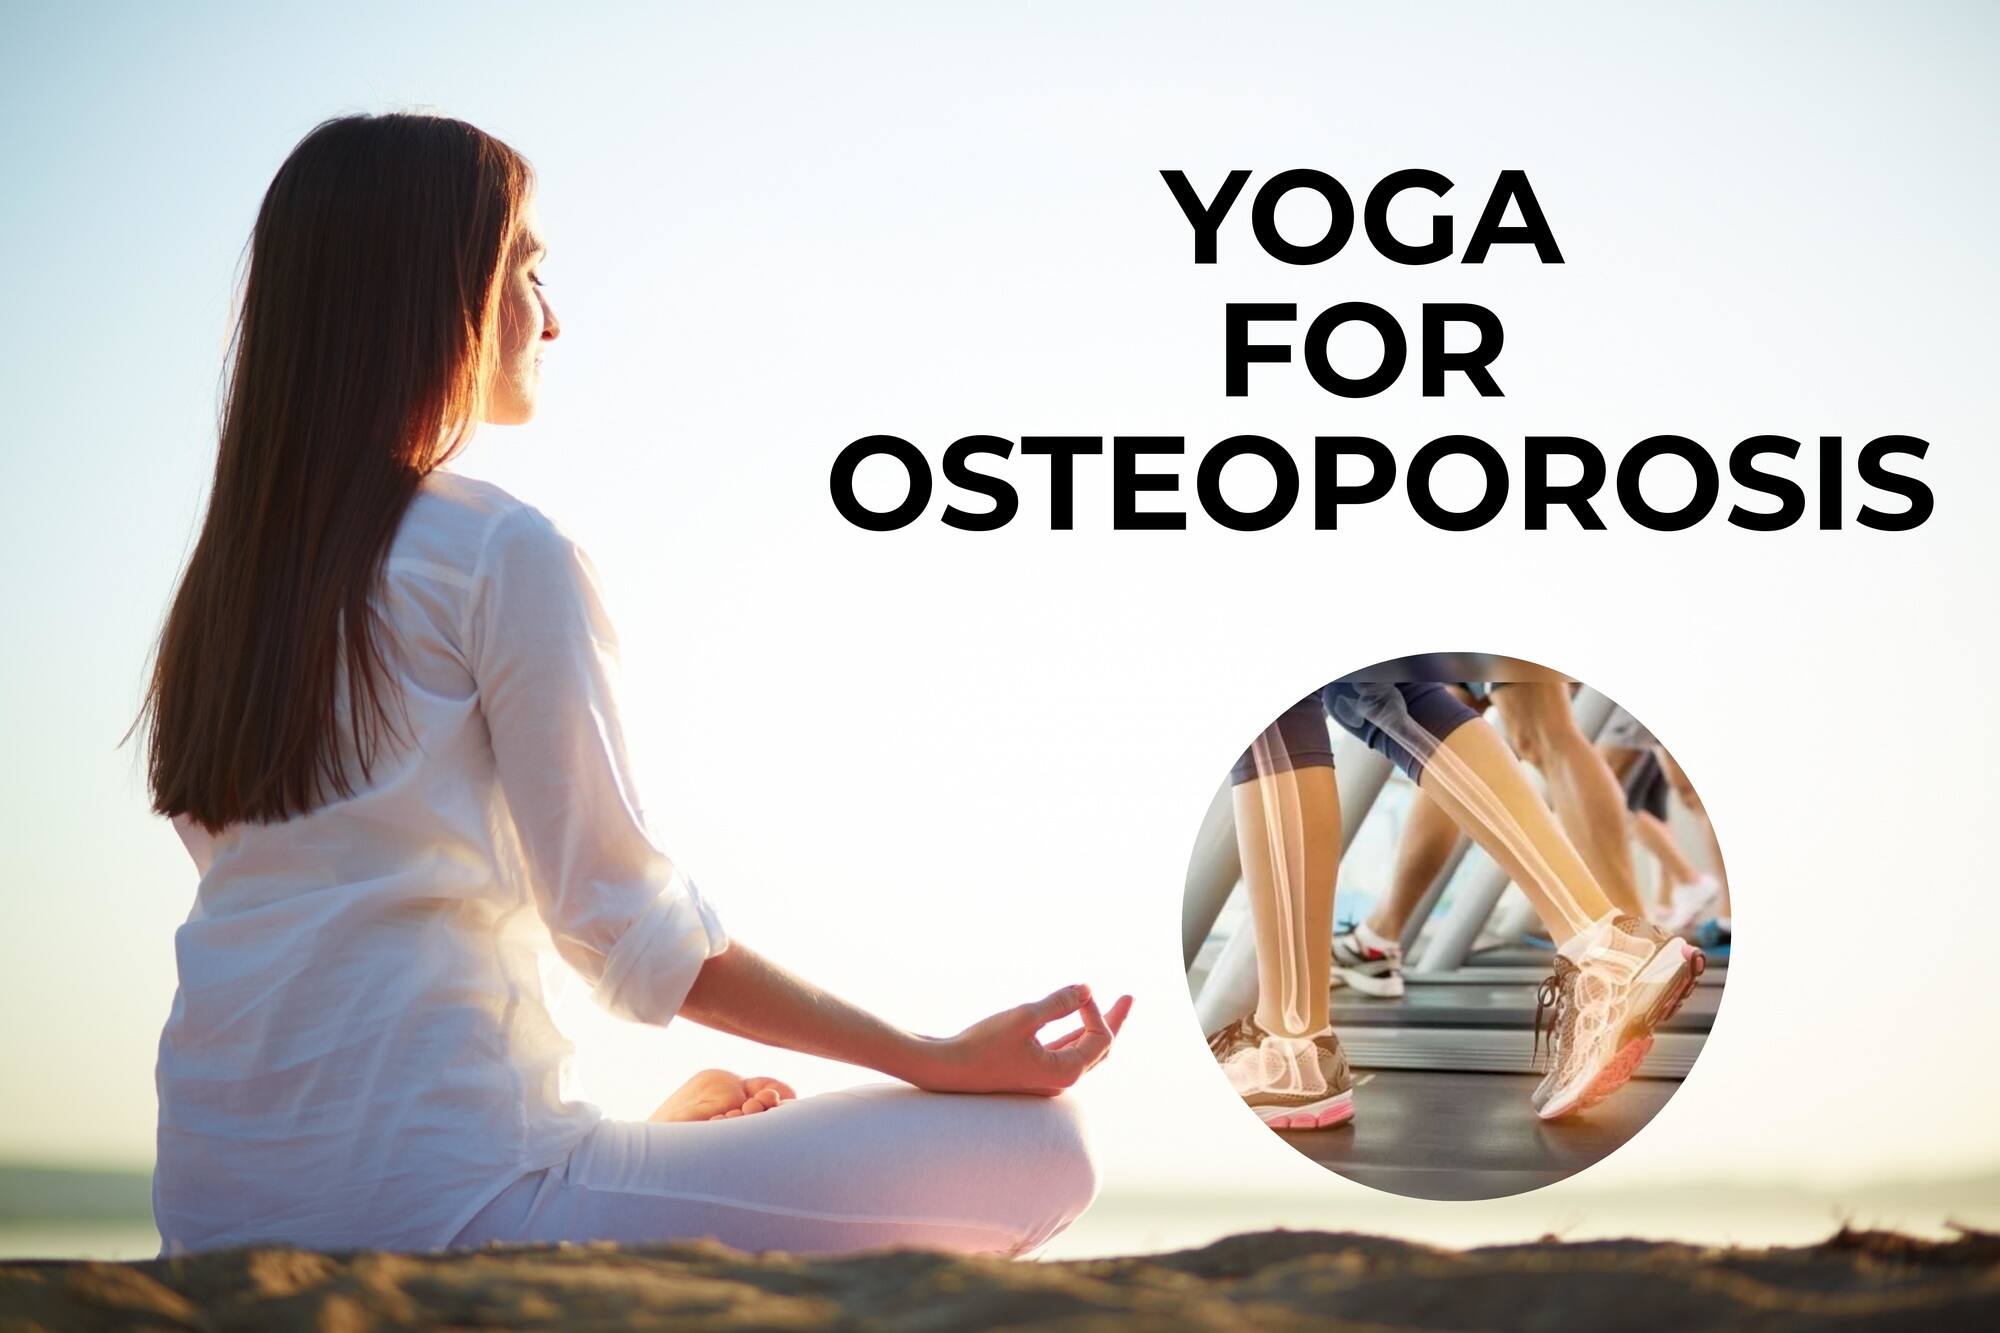 Yoga Treatment for Osteoporosis | Poses to maintain Bone Health